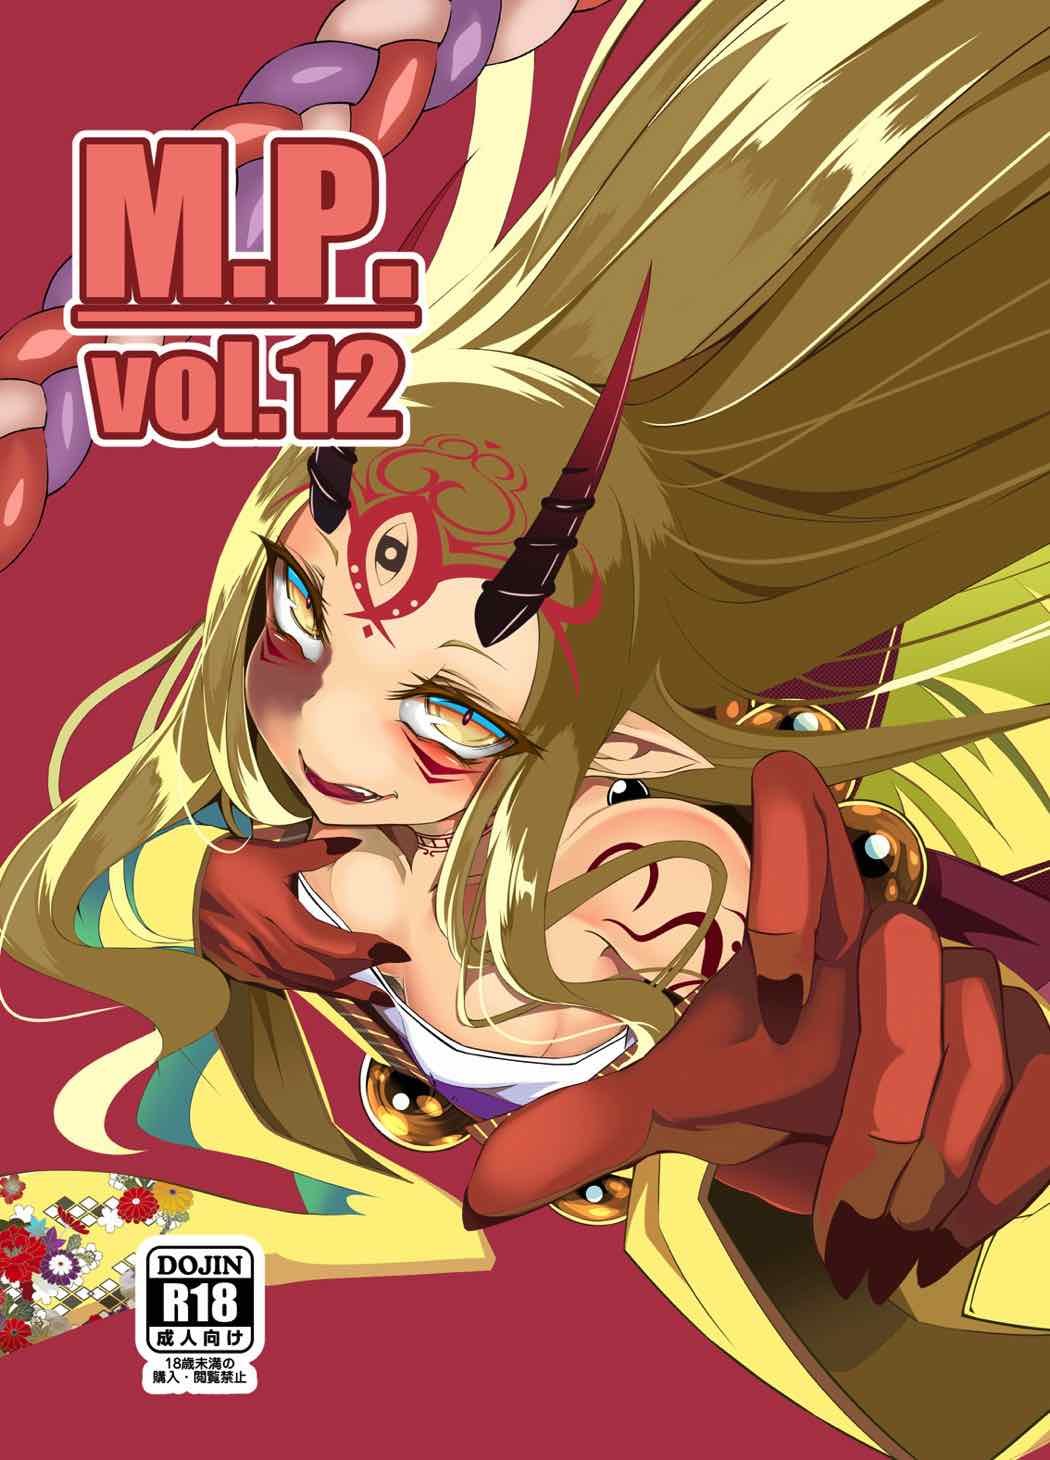 MP Vol 12 (FGO Ibaraki) - 0